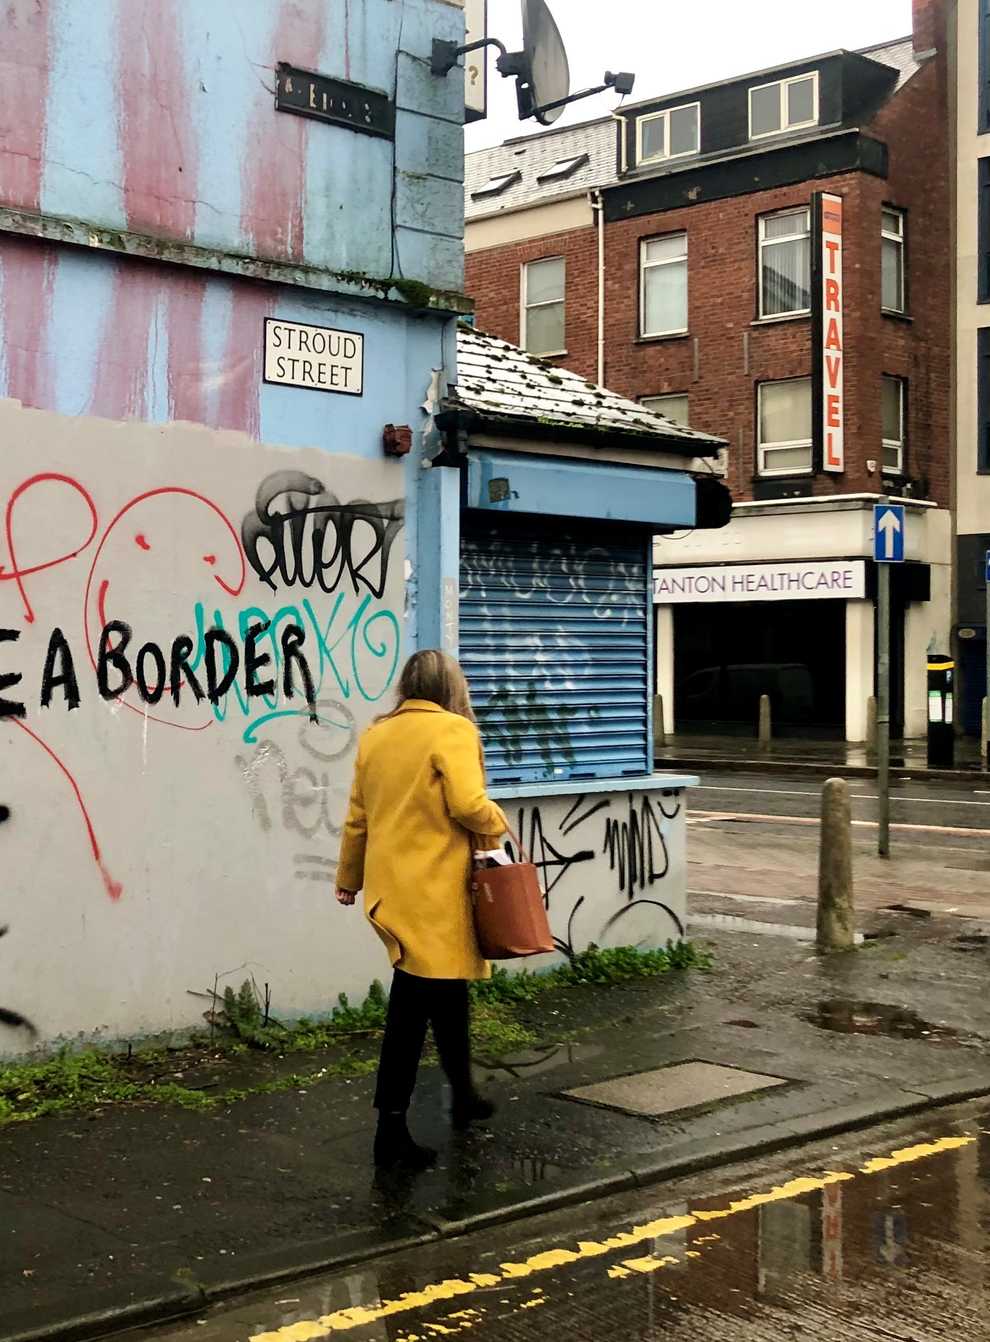 'No Irish Sea border' graffiti on a wall